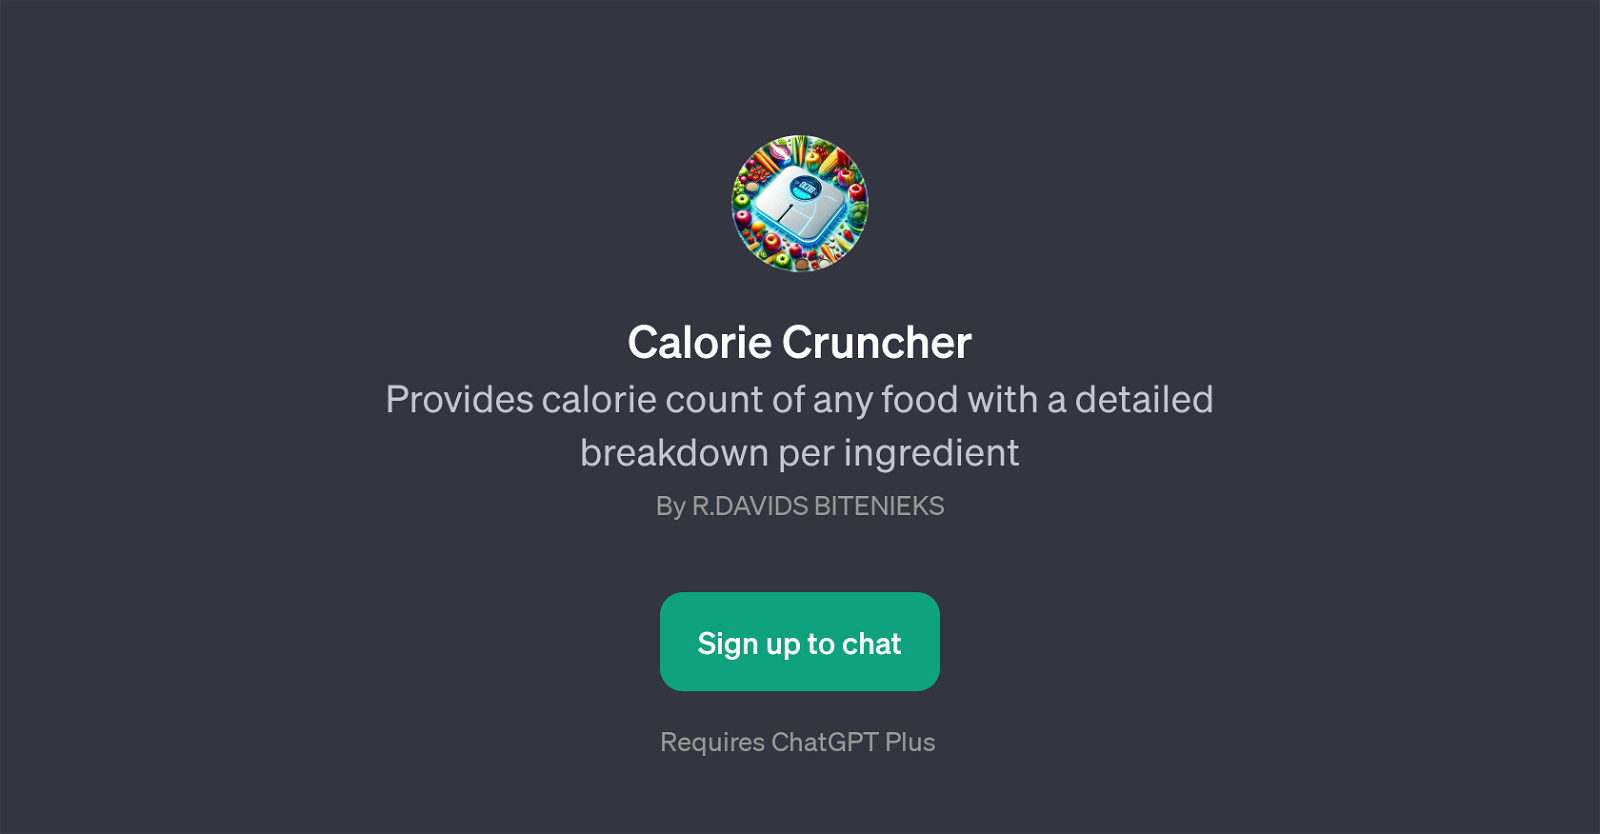 Calorie Cruncher website